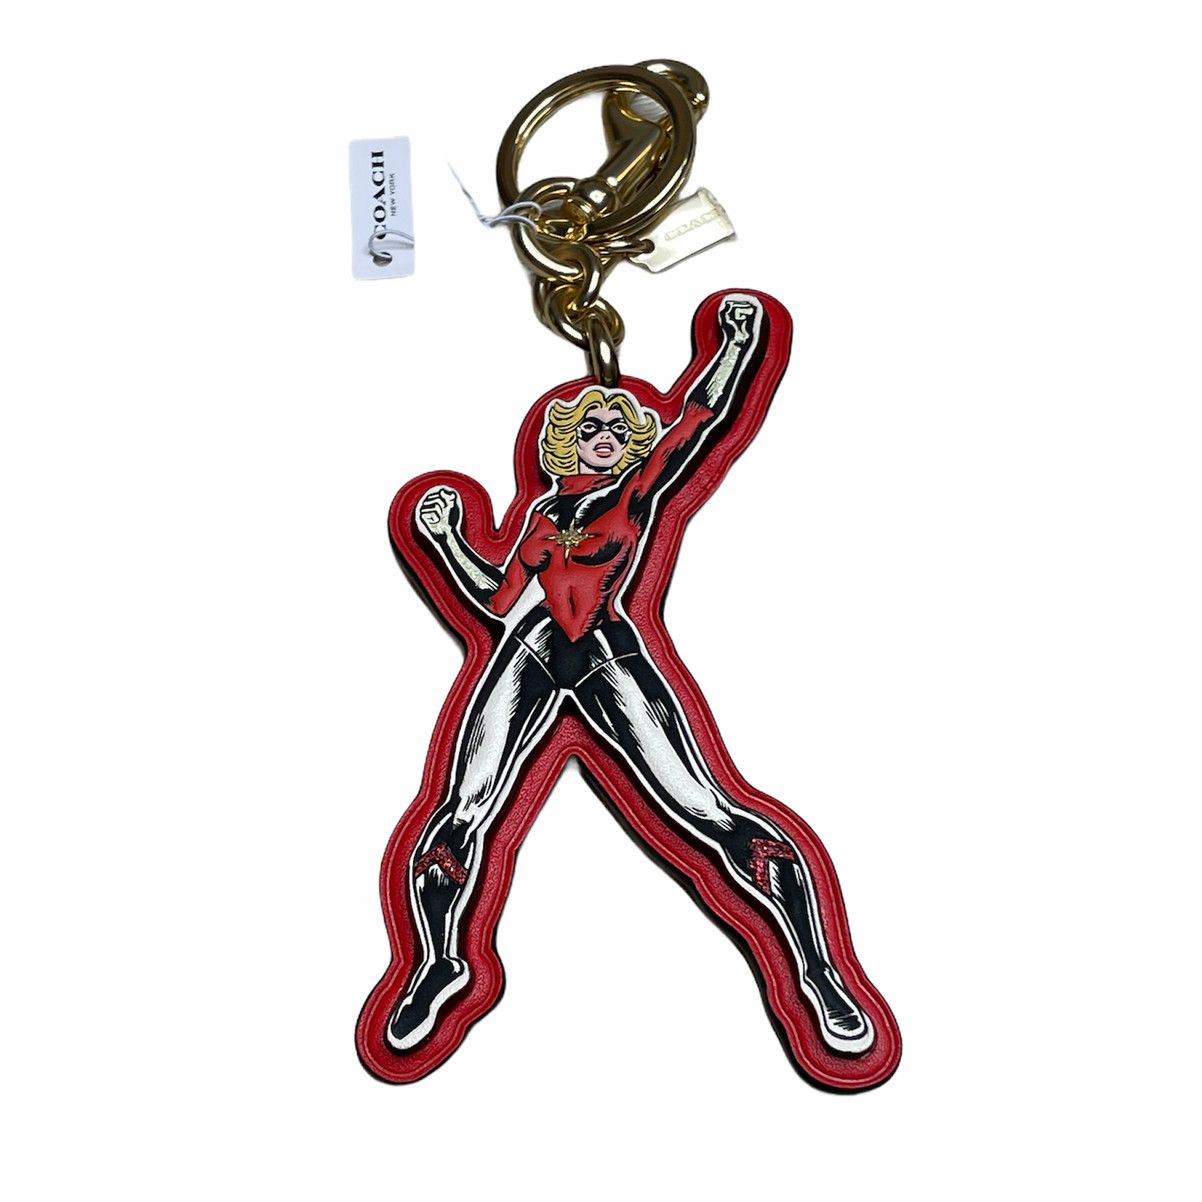 Coach Coach Marvel Carol Danvers Key Fob Bag Charm Key ring | Grailed